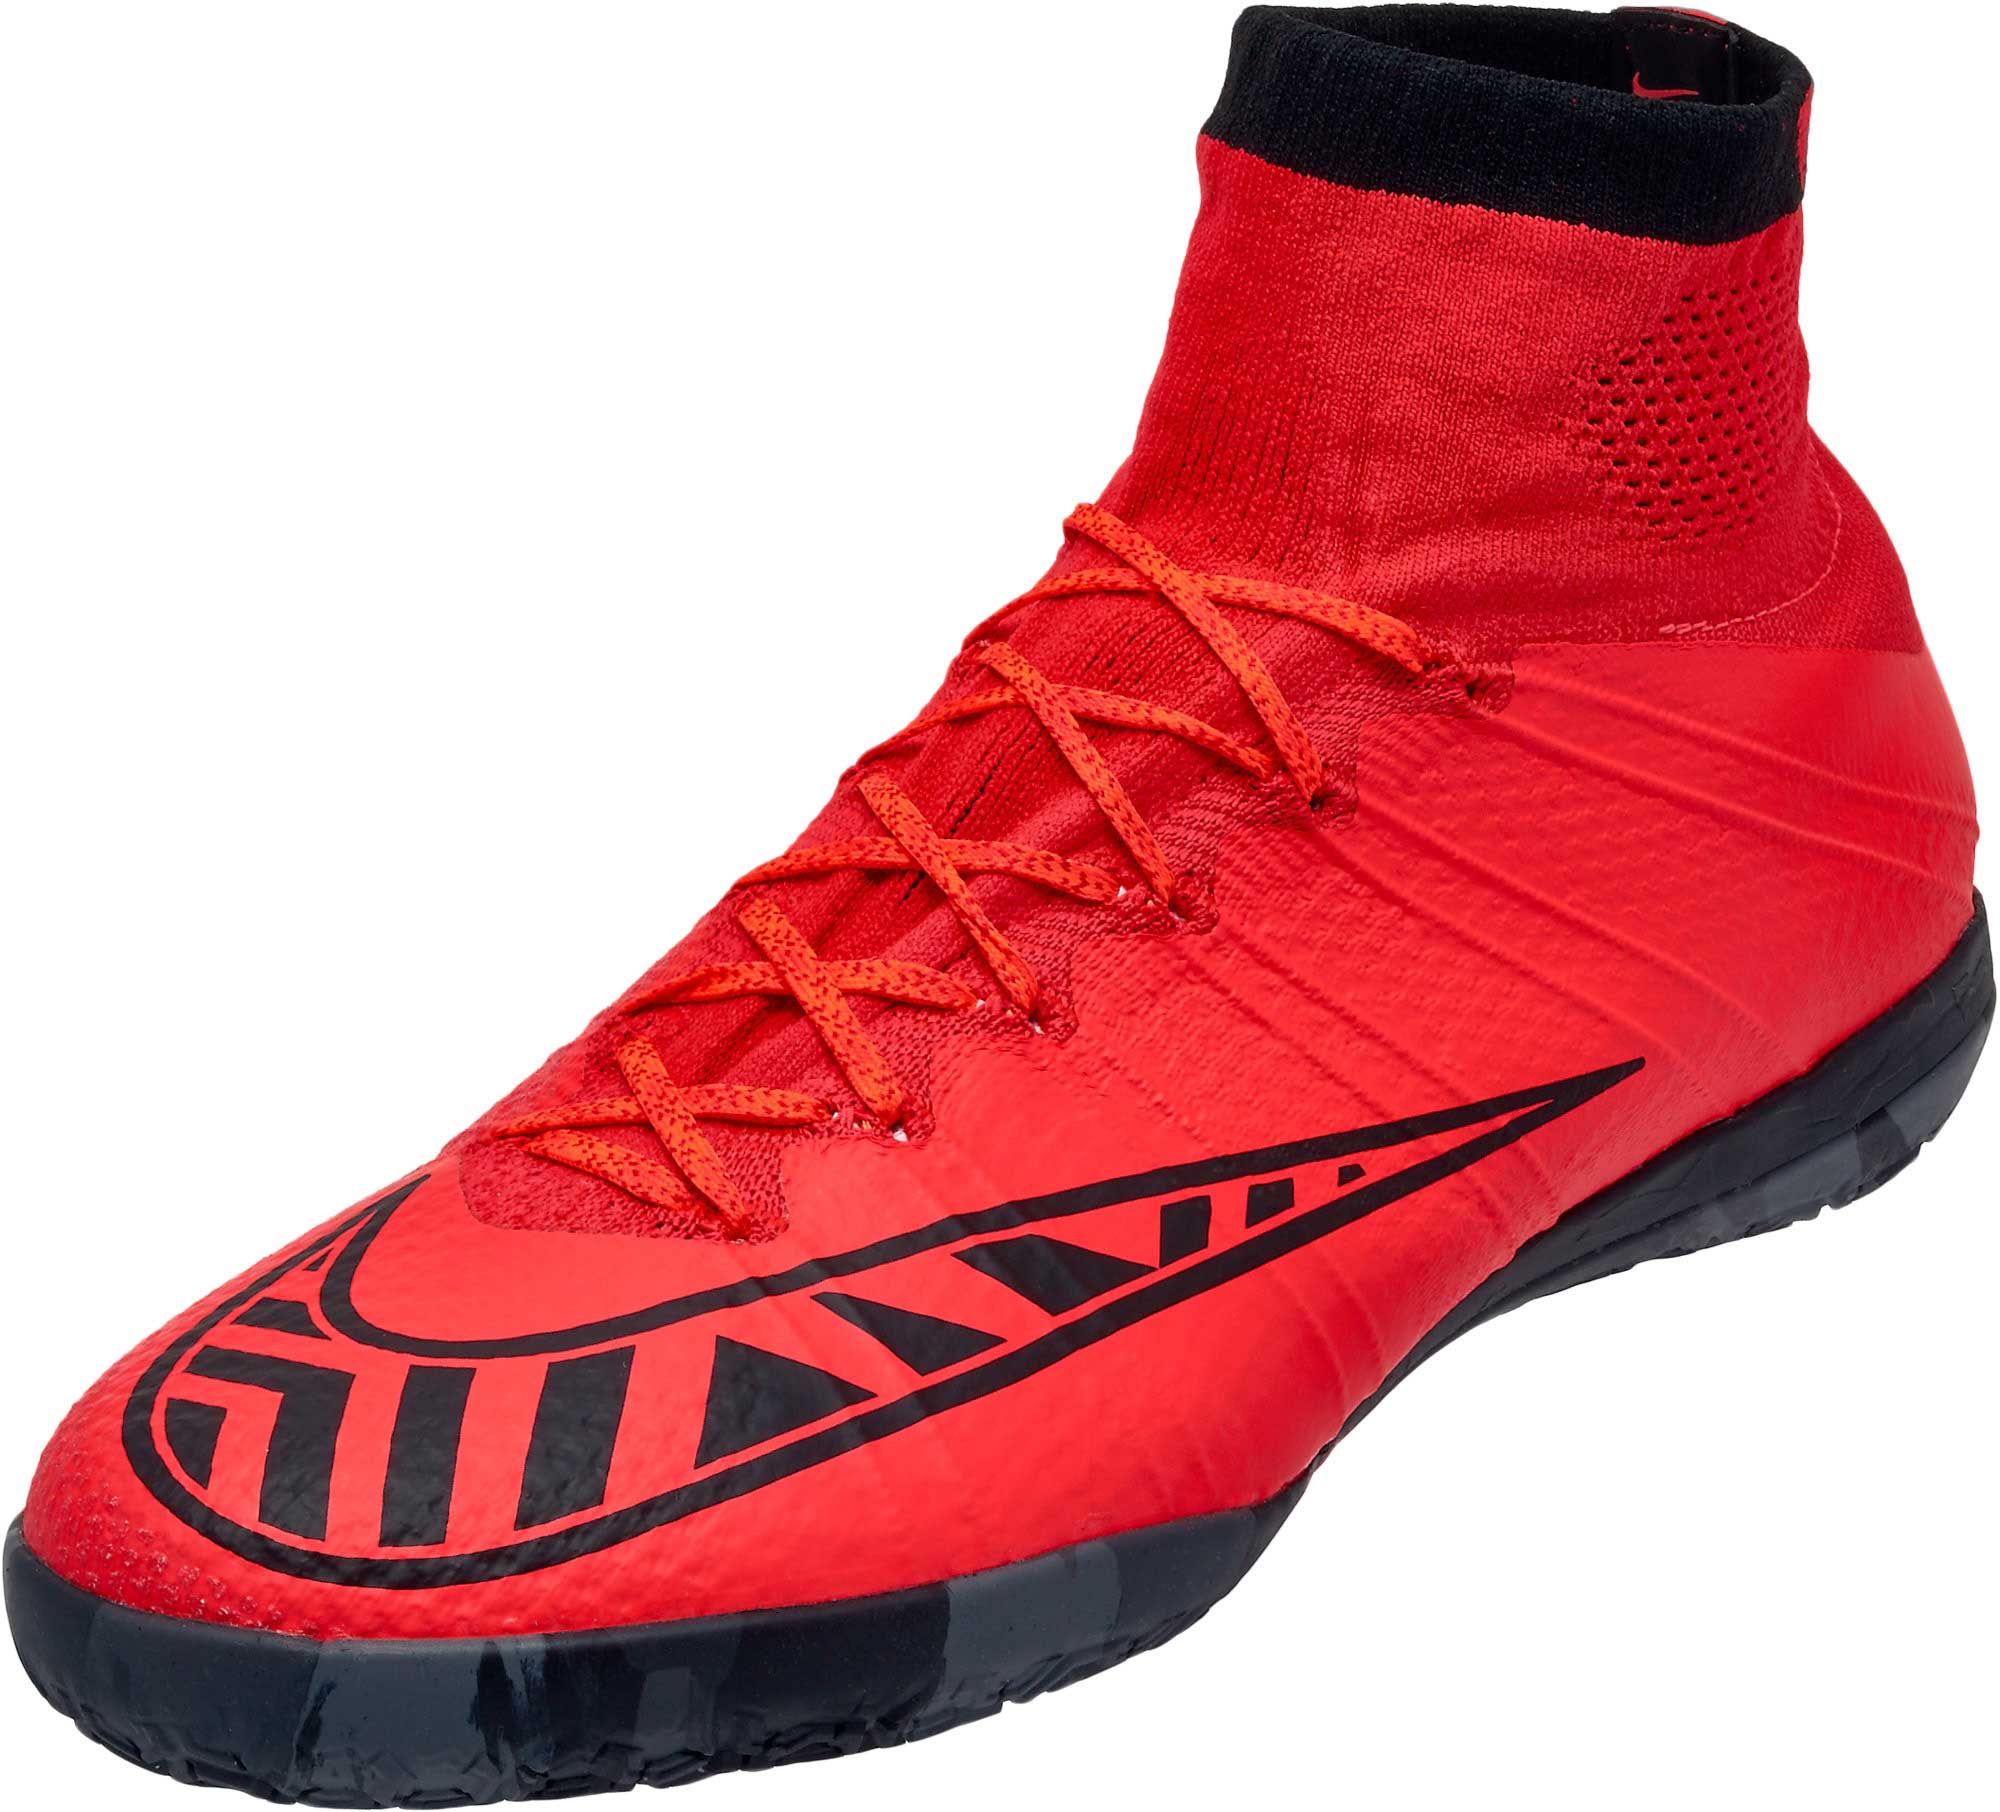 Concurso Canguro Sedante Nike MercurialX Proximo Indoor Shoes - Red Nike Soccer Shoes